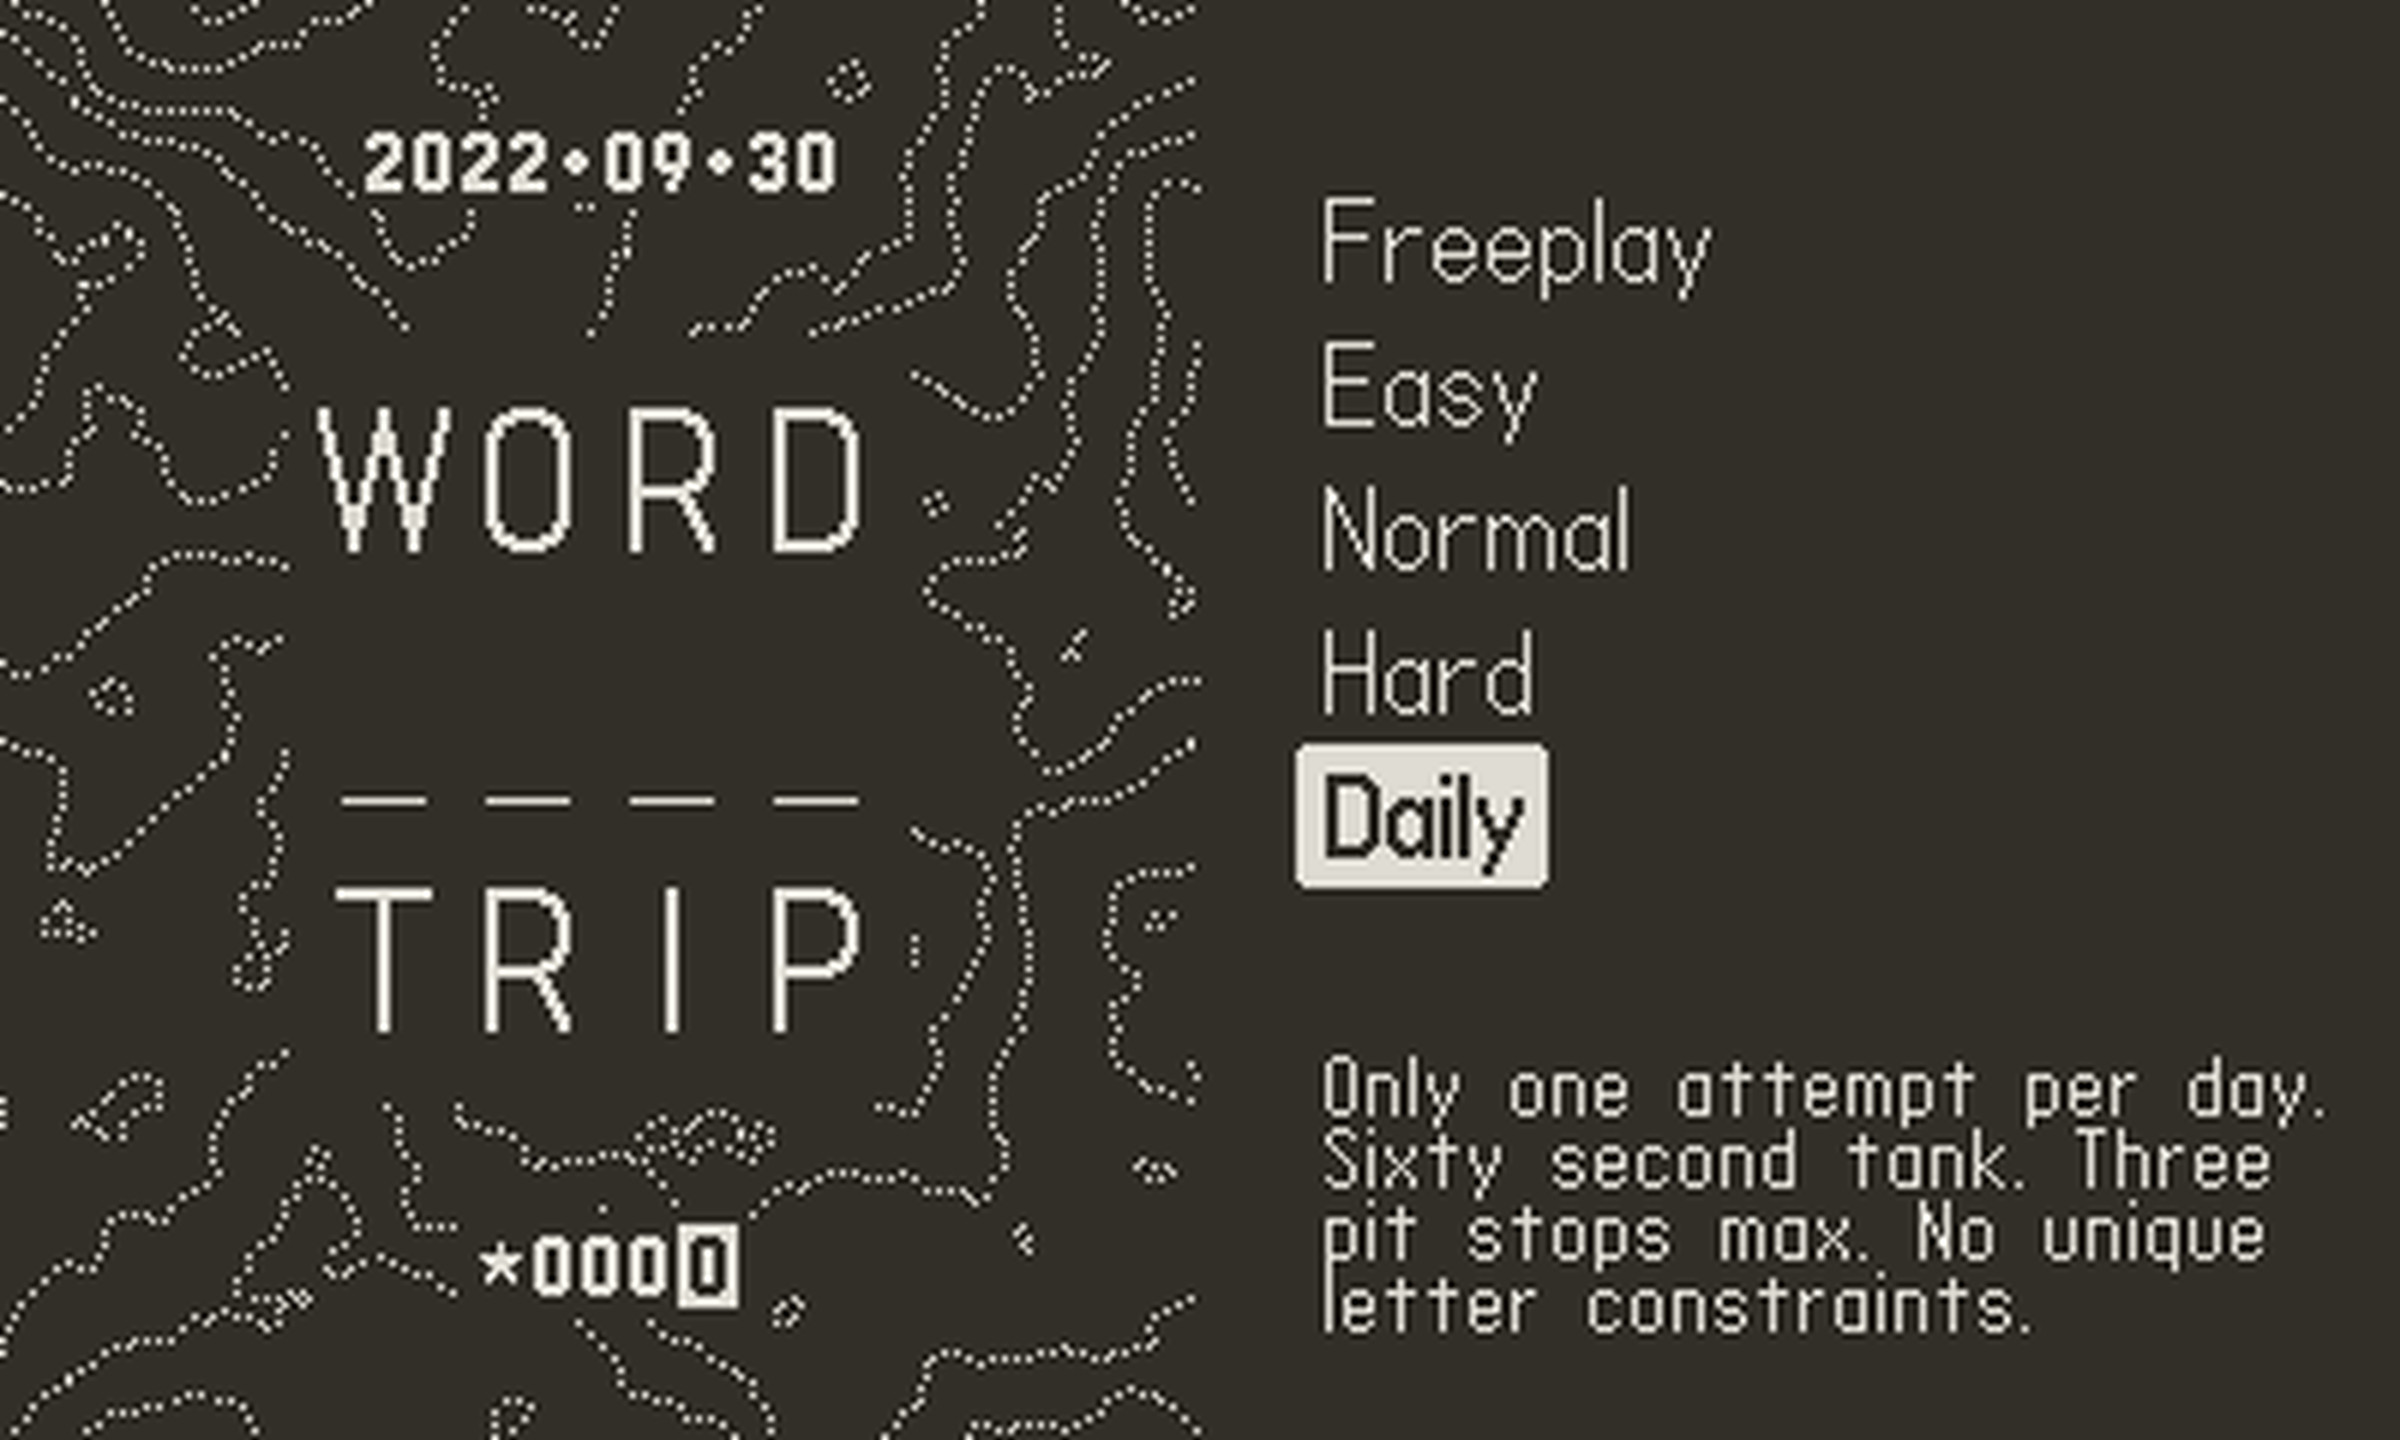 A screenshot of the Playdate game Word Trip.